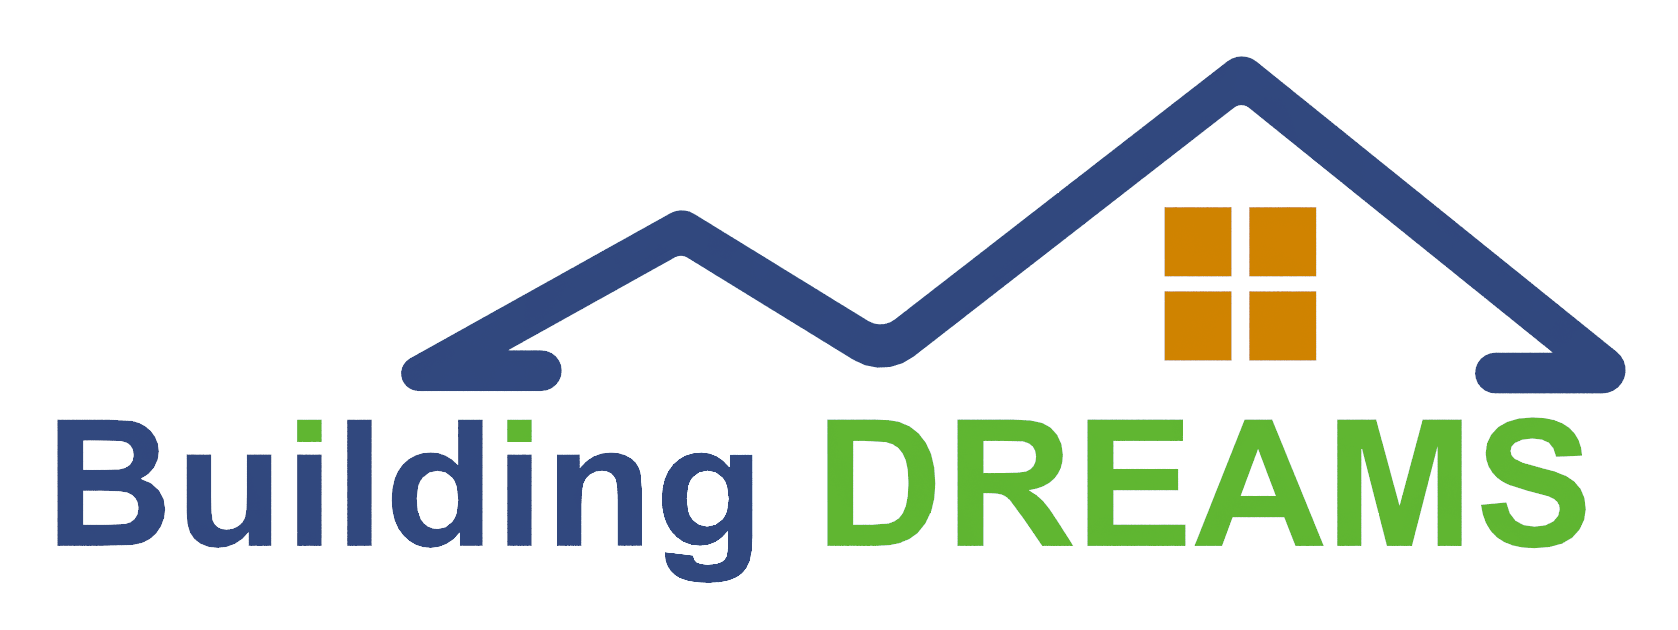 Building Technology Logo - Home Dreams Inc